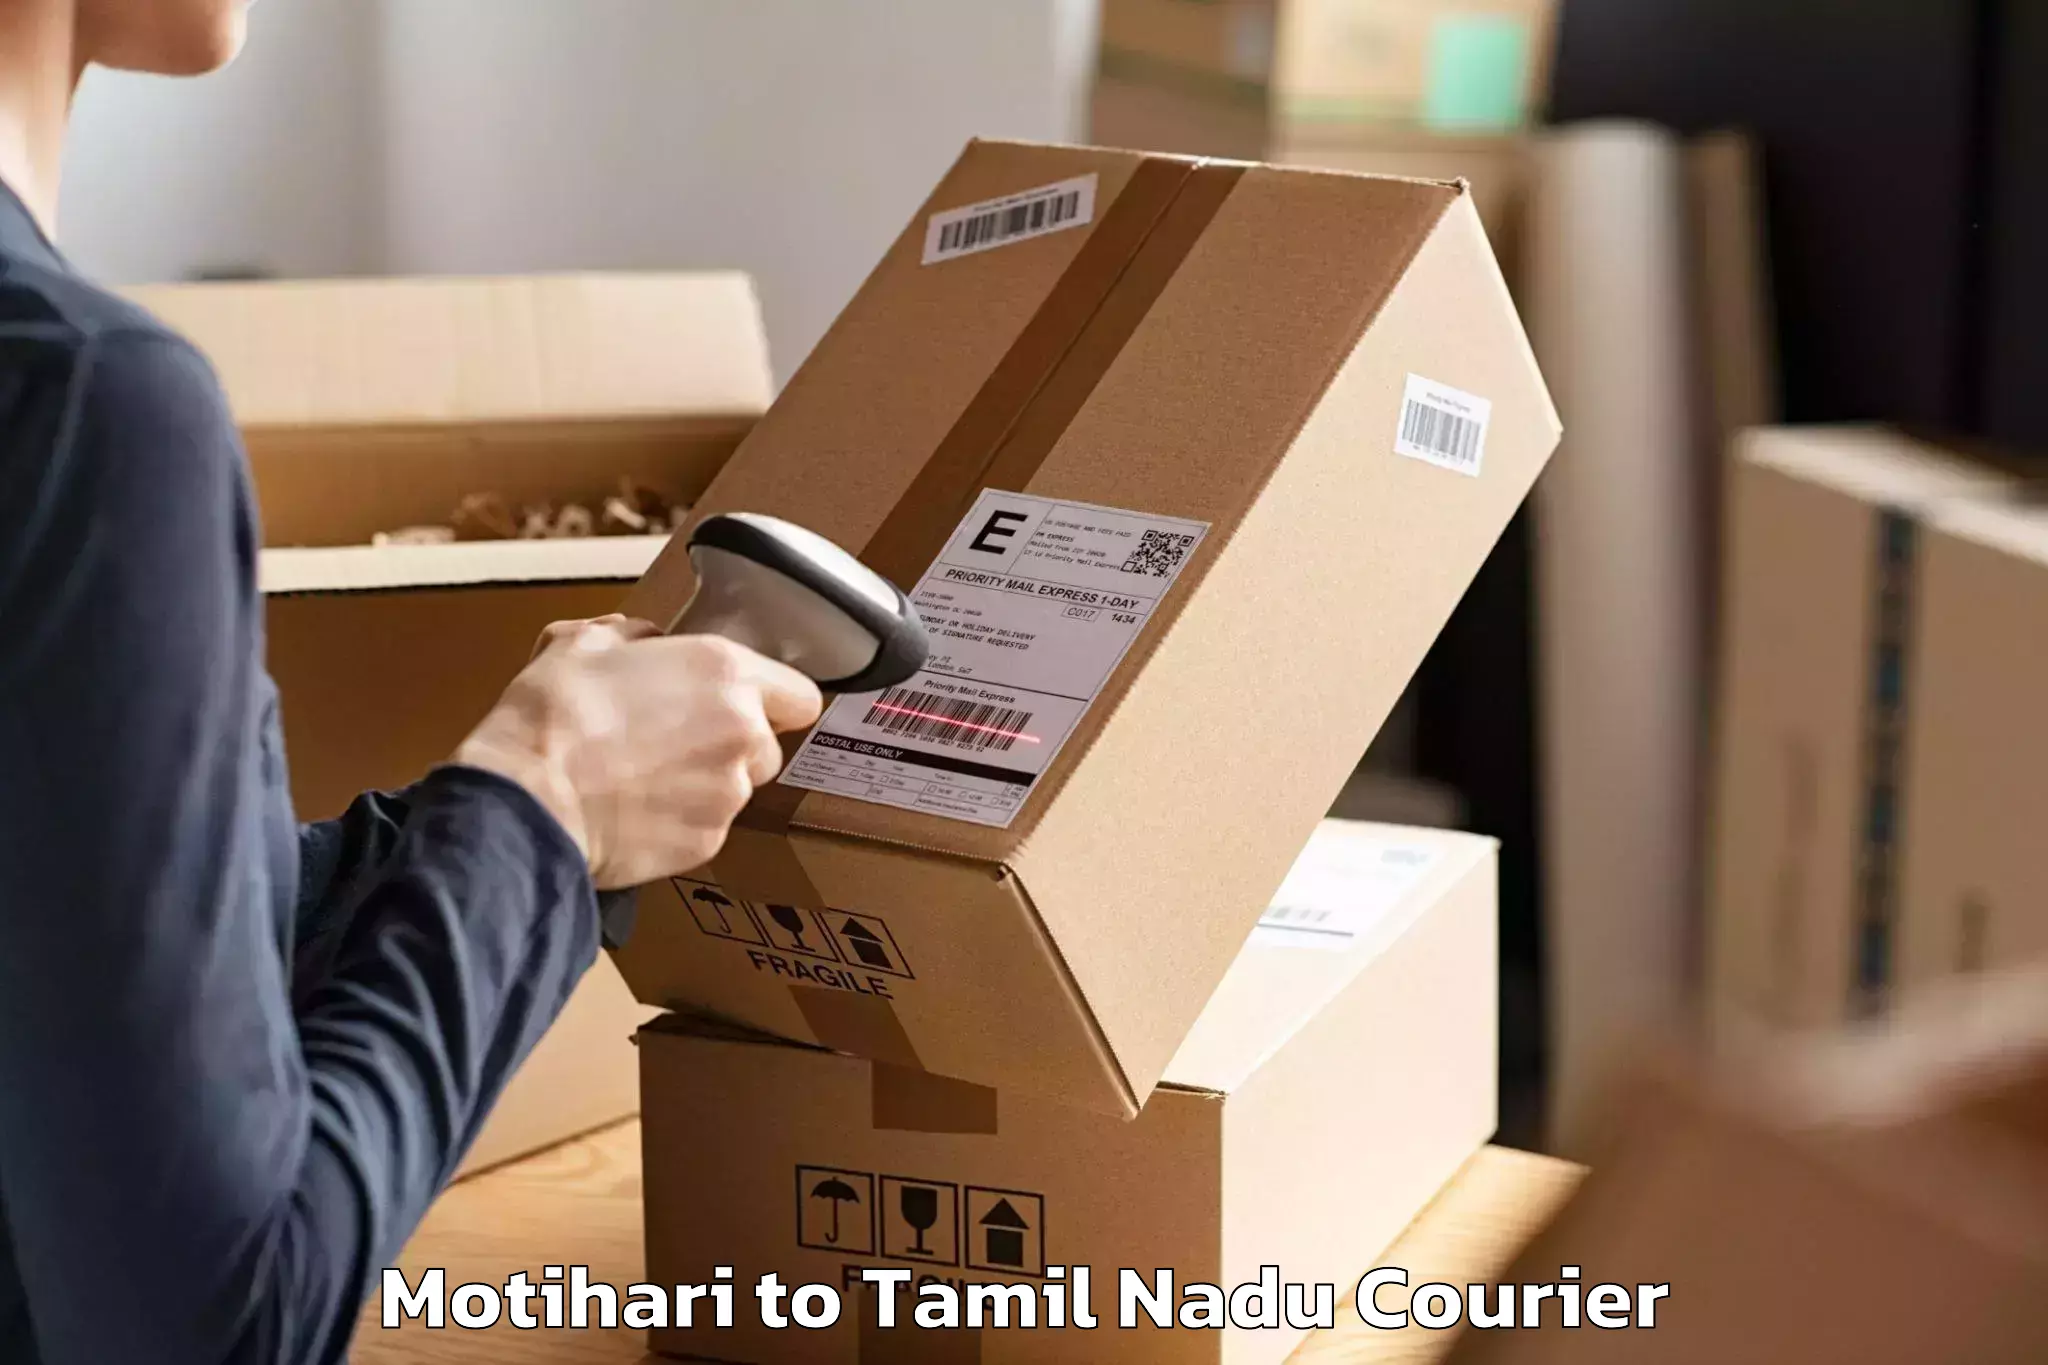 Furniture delivery service Motihari to Ennore Port Chennai